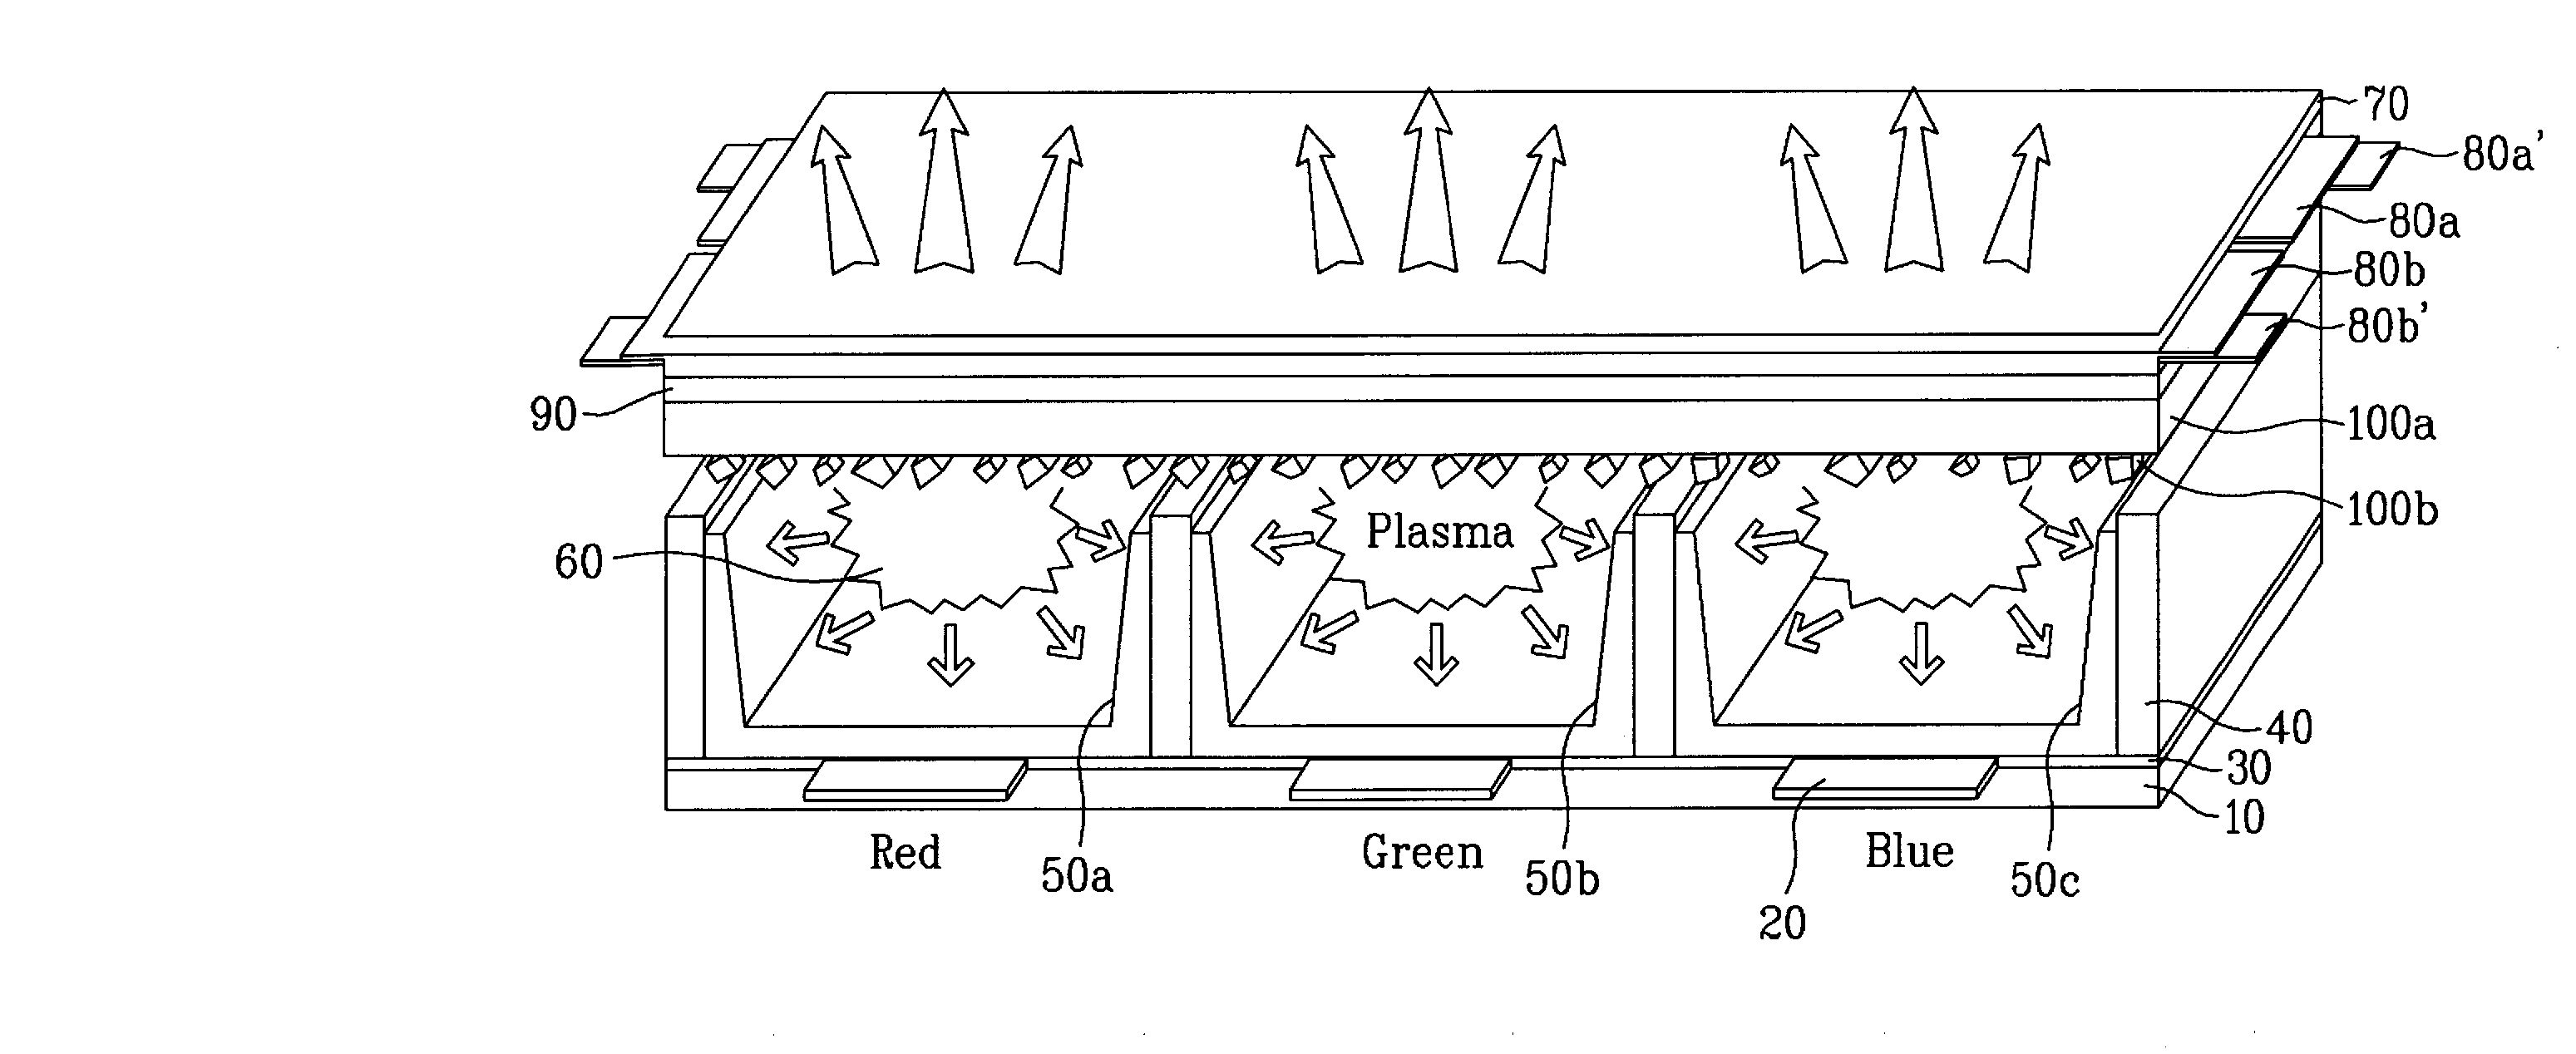 Plasma display panel and related technologies